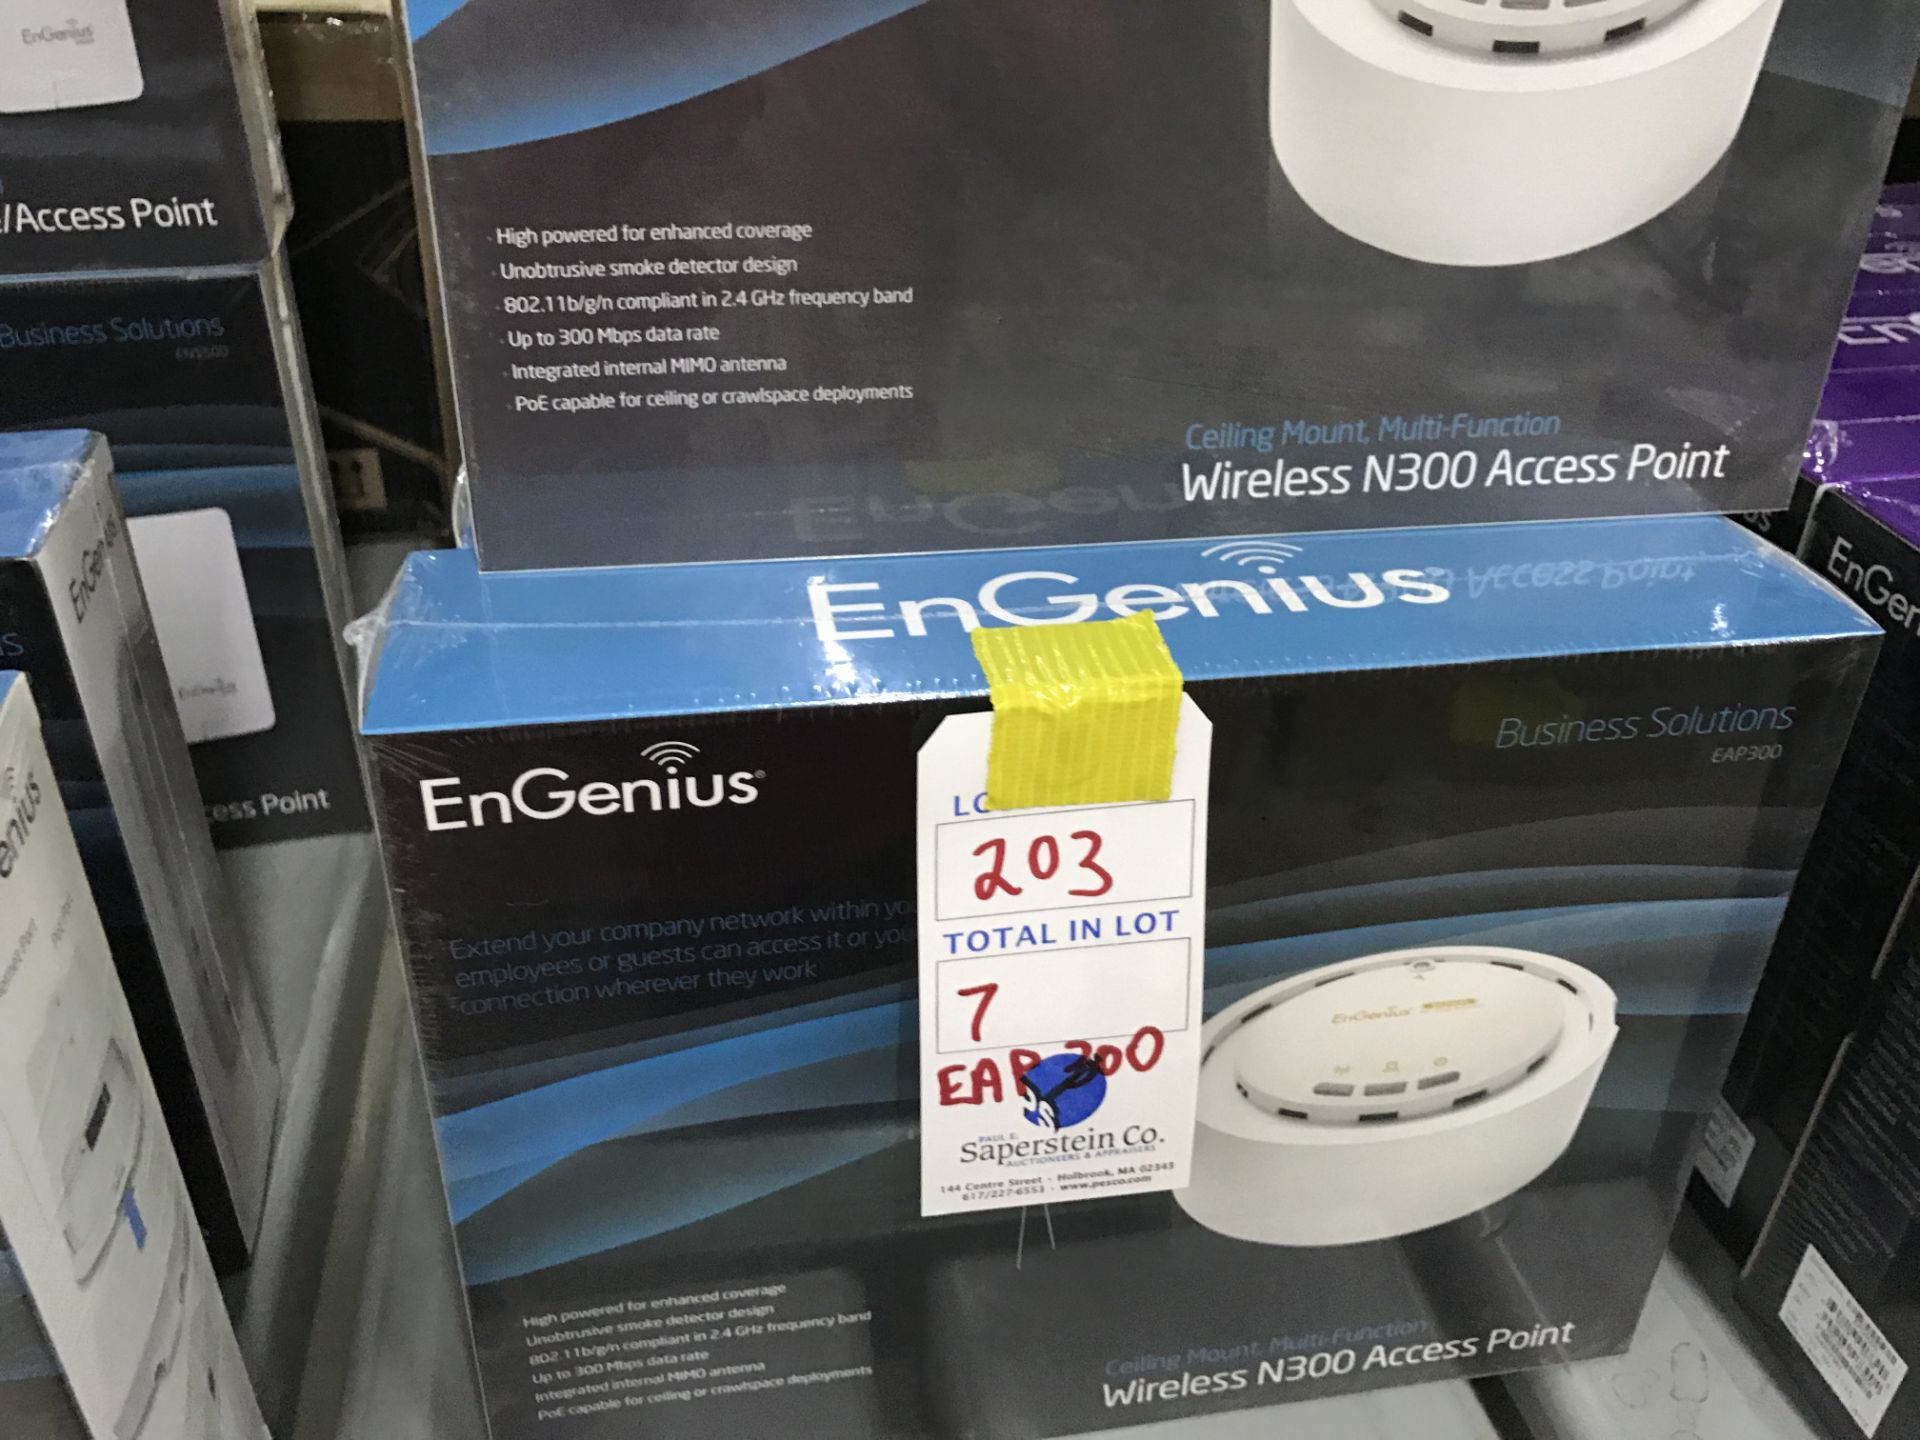 (7) EnGenius #EAP-300 Wireless N300 Access Point